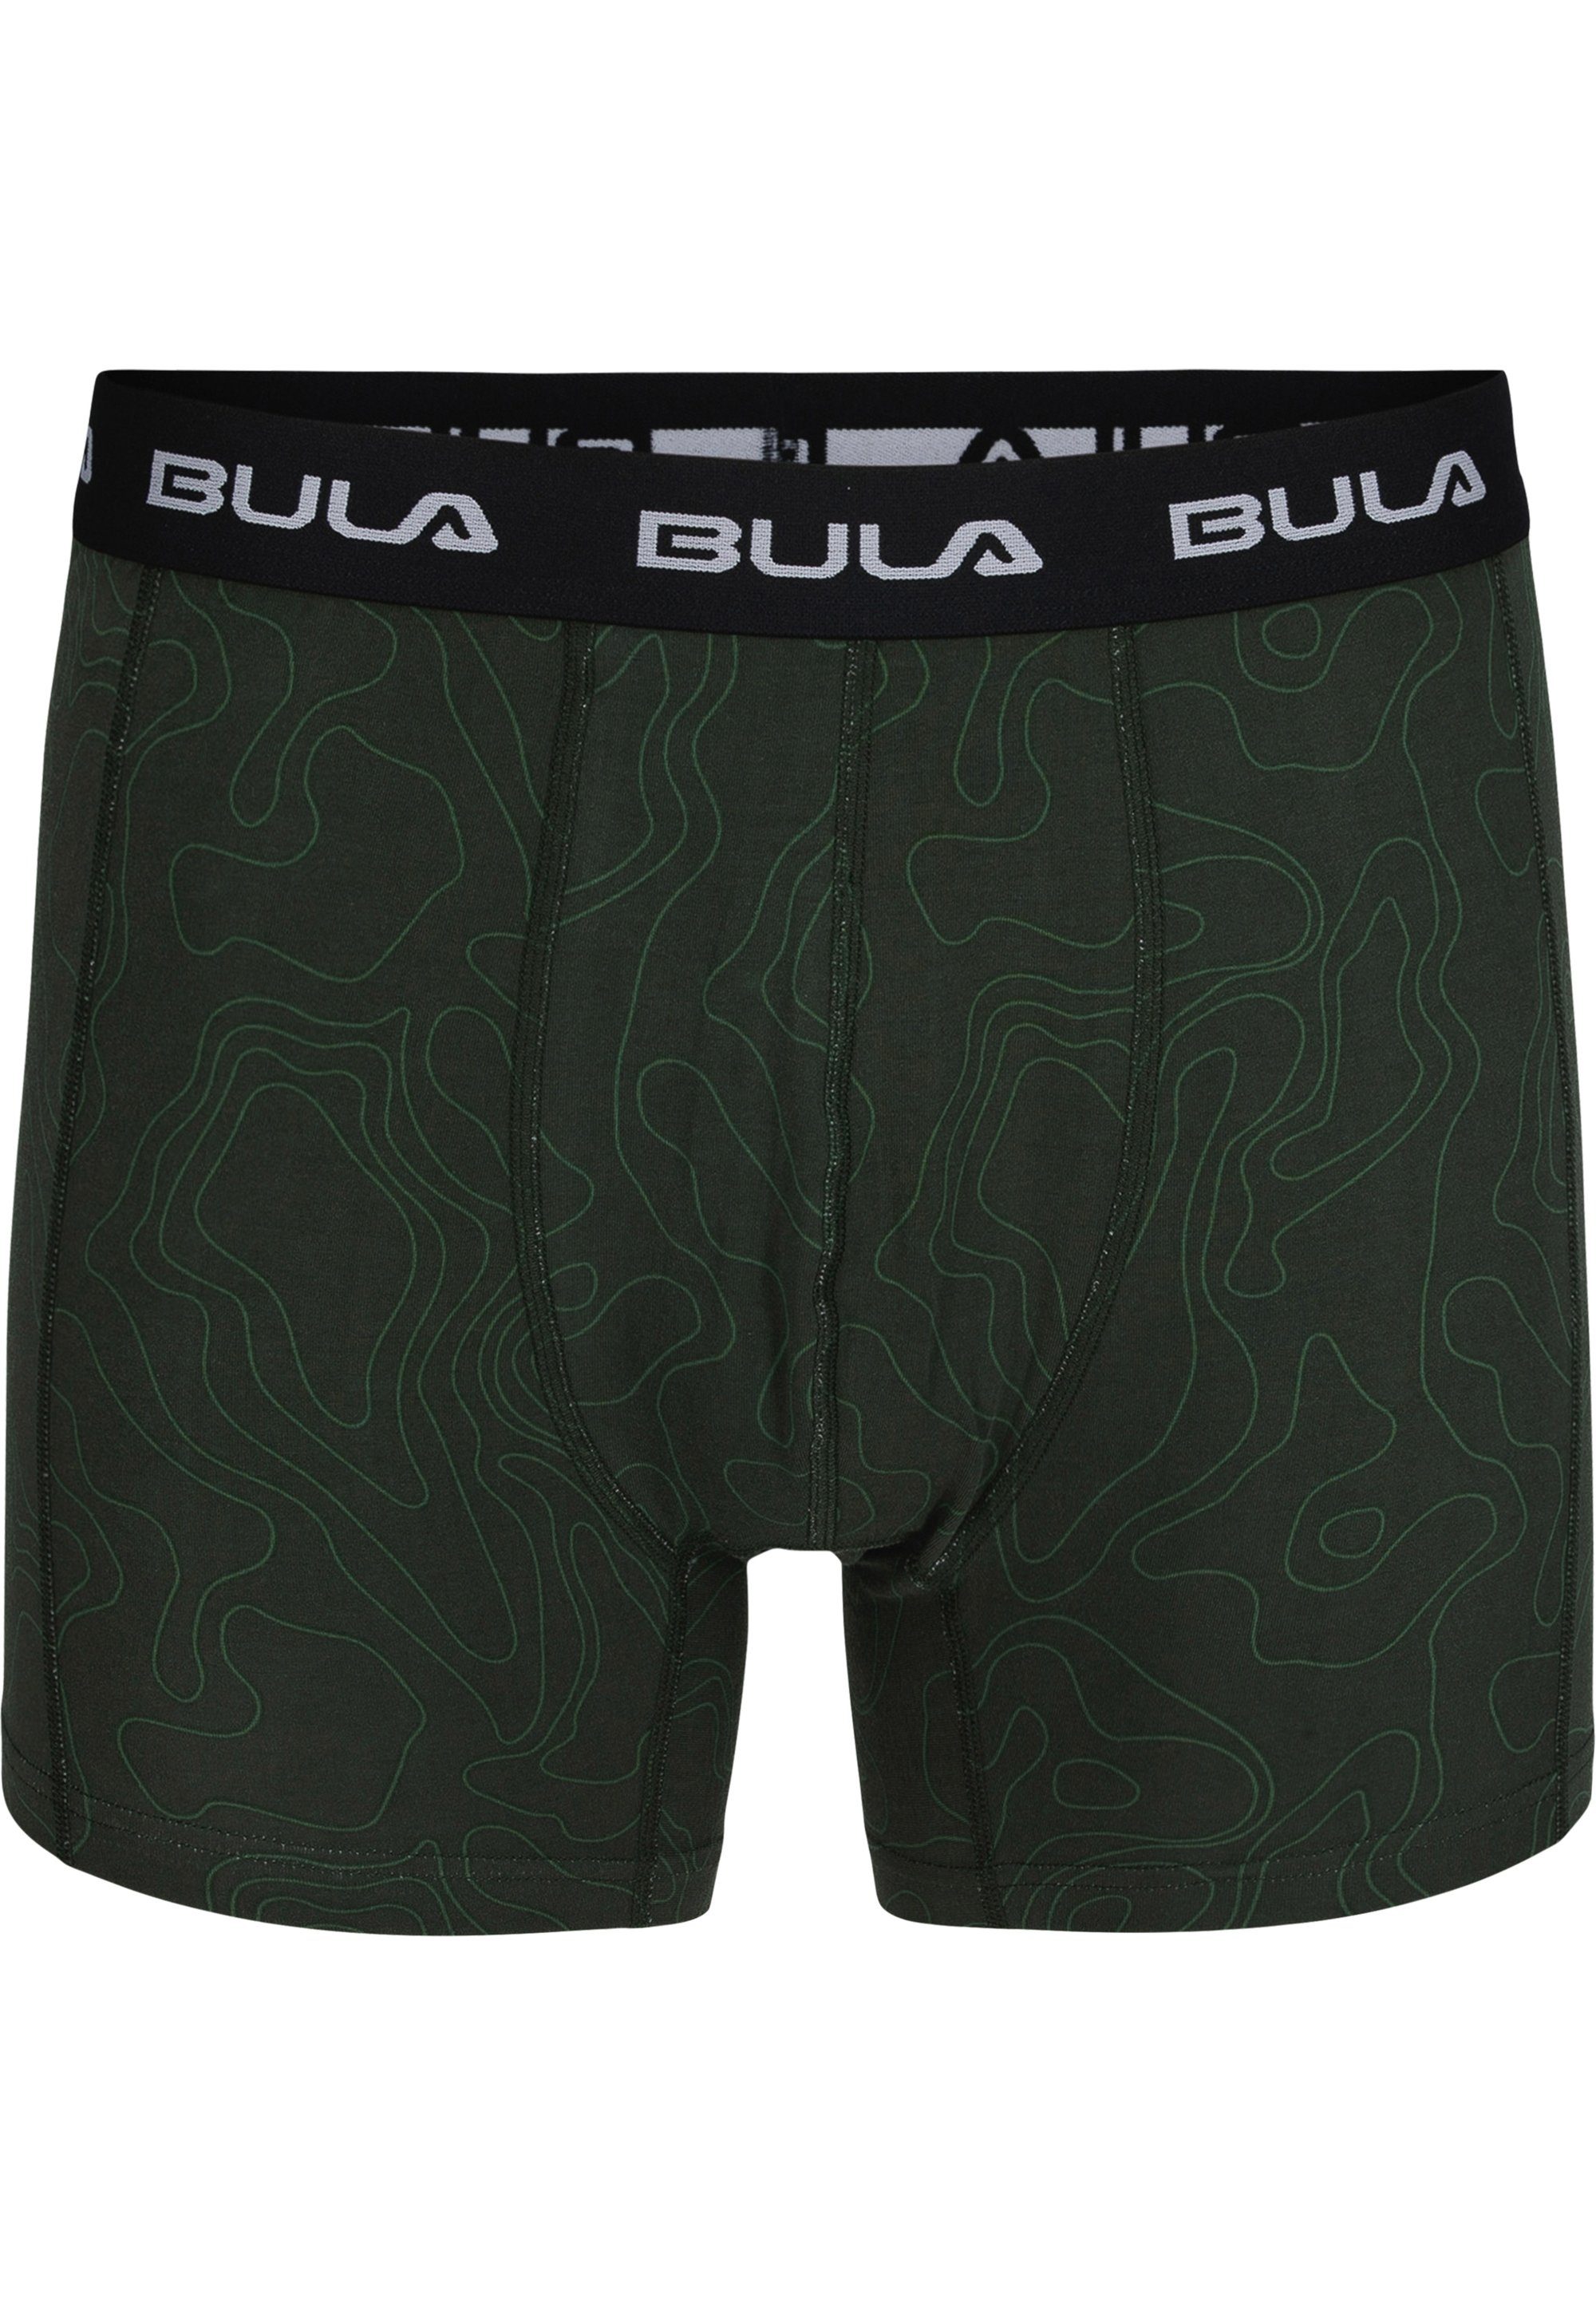 BULA Boxershorts 2er-Pack im sportlichen Design grau